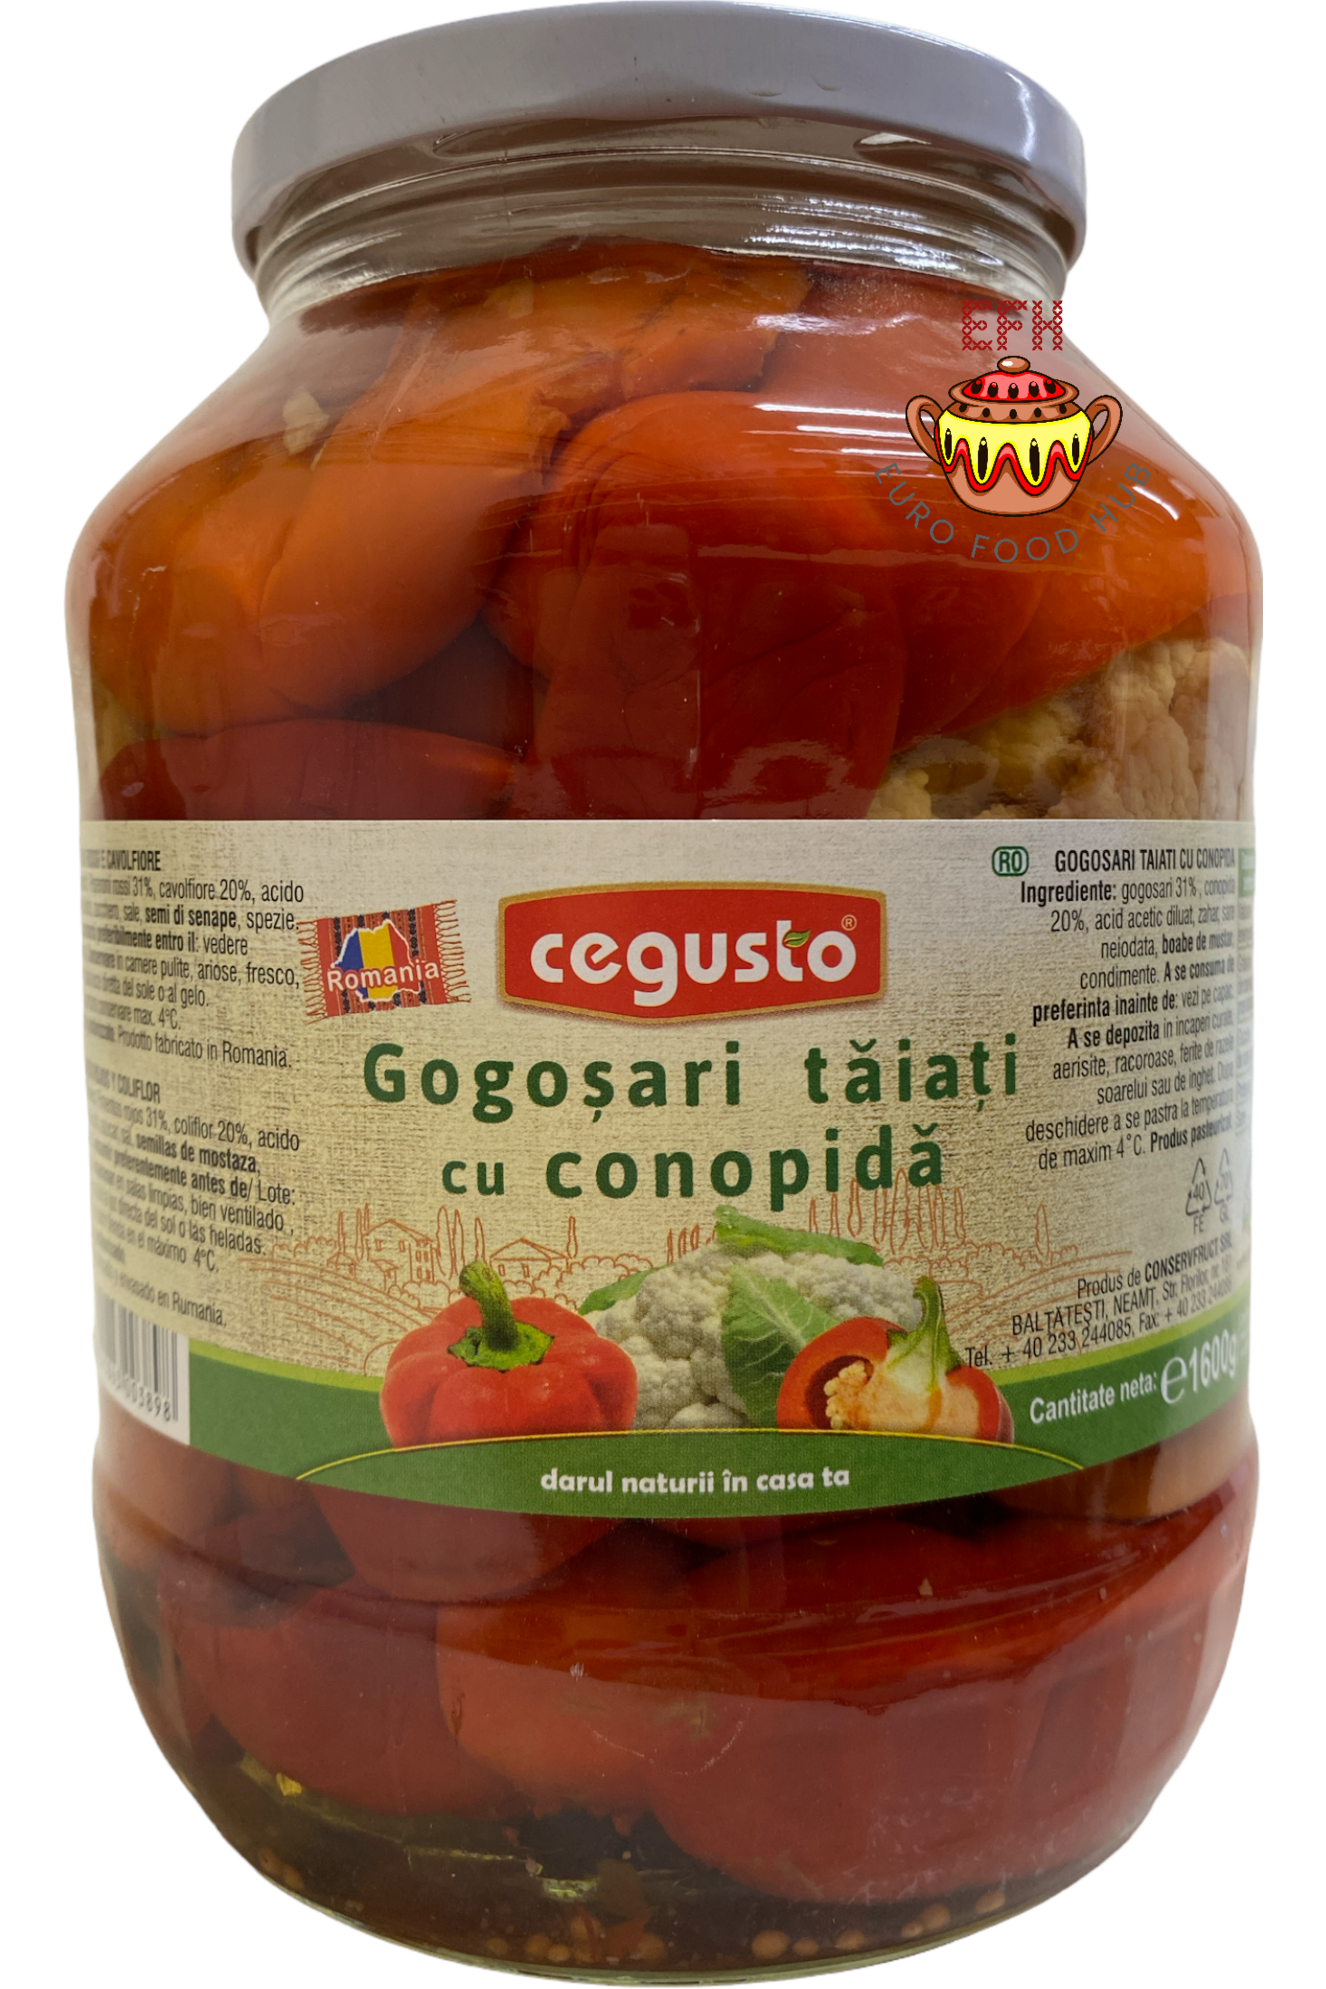 Pickled Bell Peppers with Cauliflower - Conservfruct - GOGOSARI Taiati cu Conopida 1.6 kg